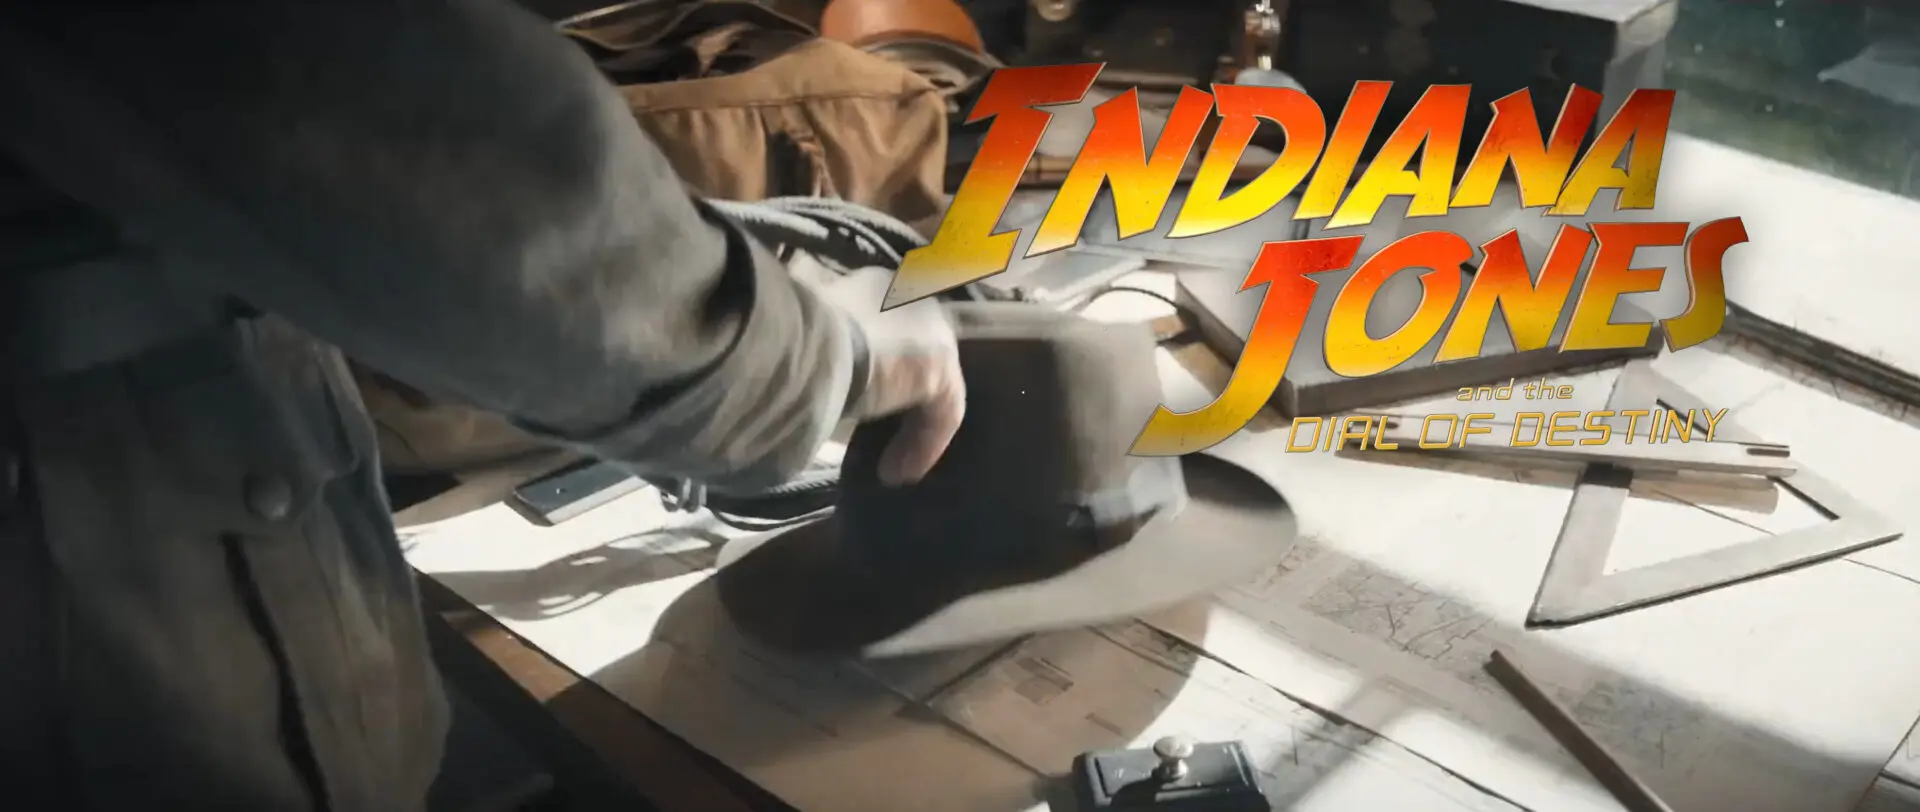 indy jones 5 teaser trailer banner